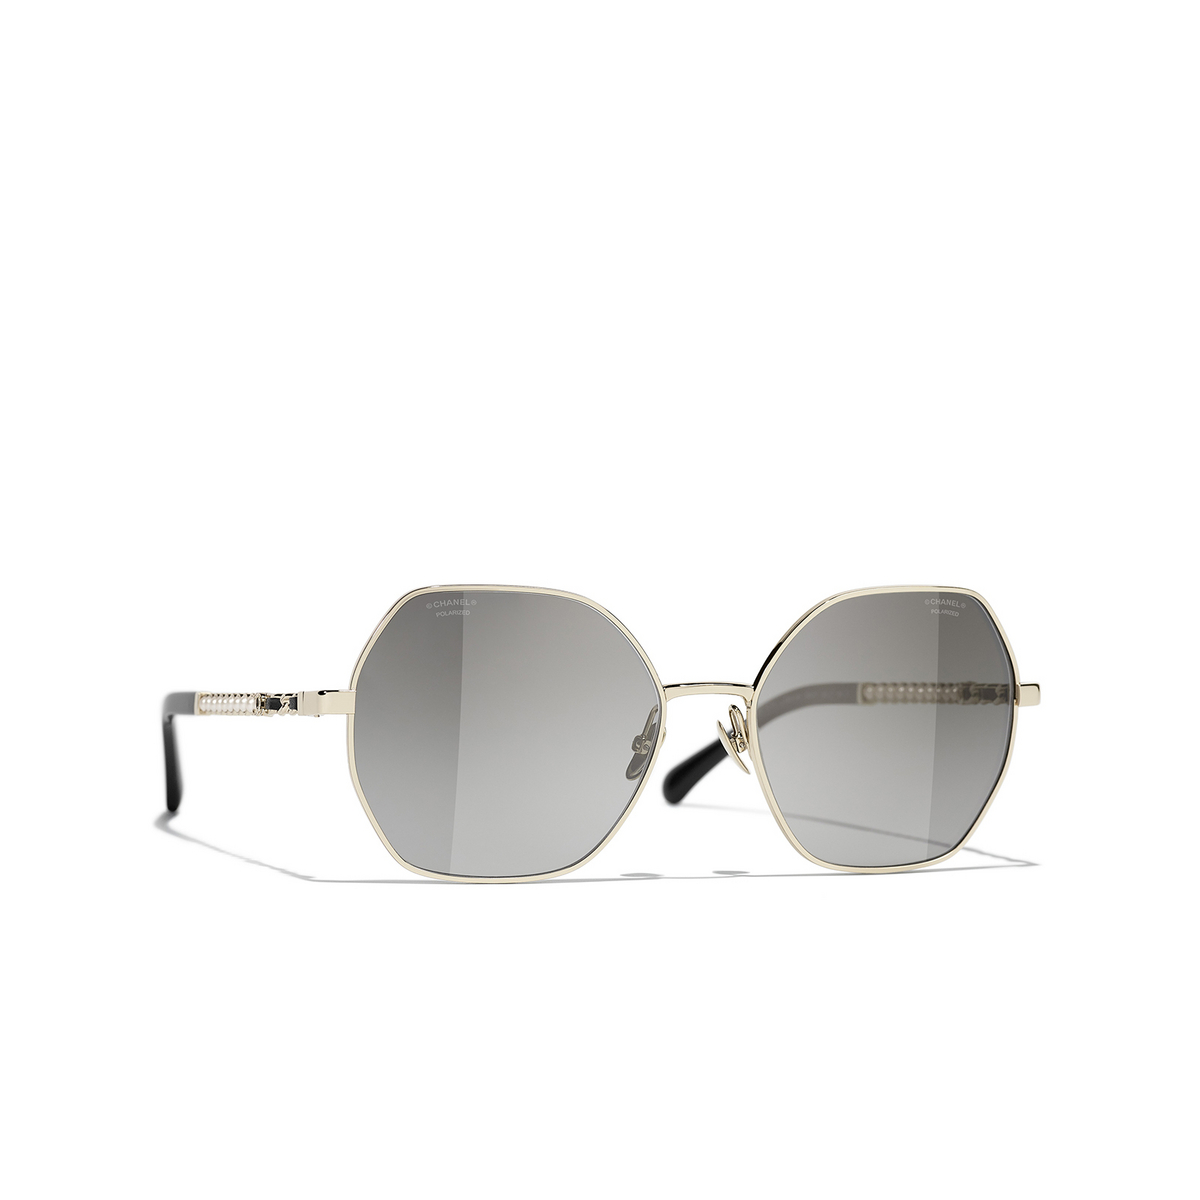 CHANEL square Sunglasses C395M3 Gold & Black - three-quarters view